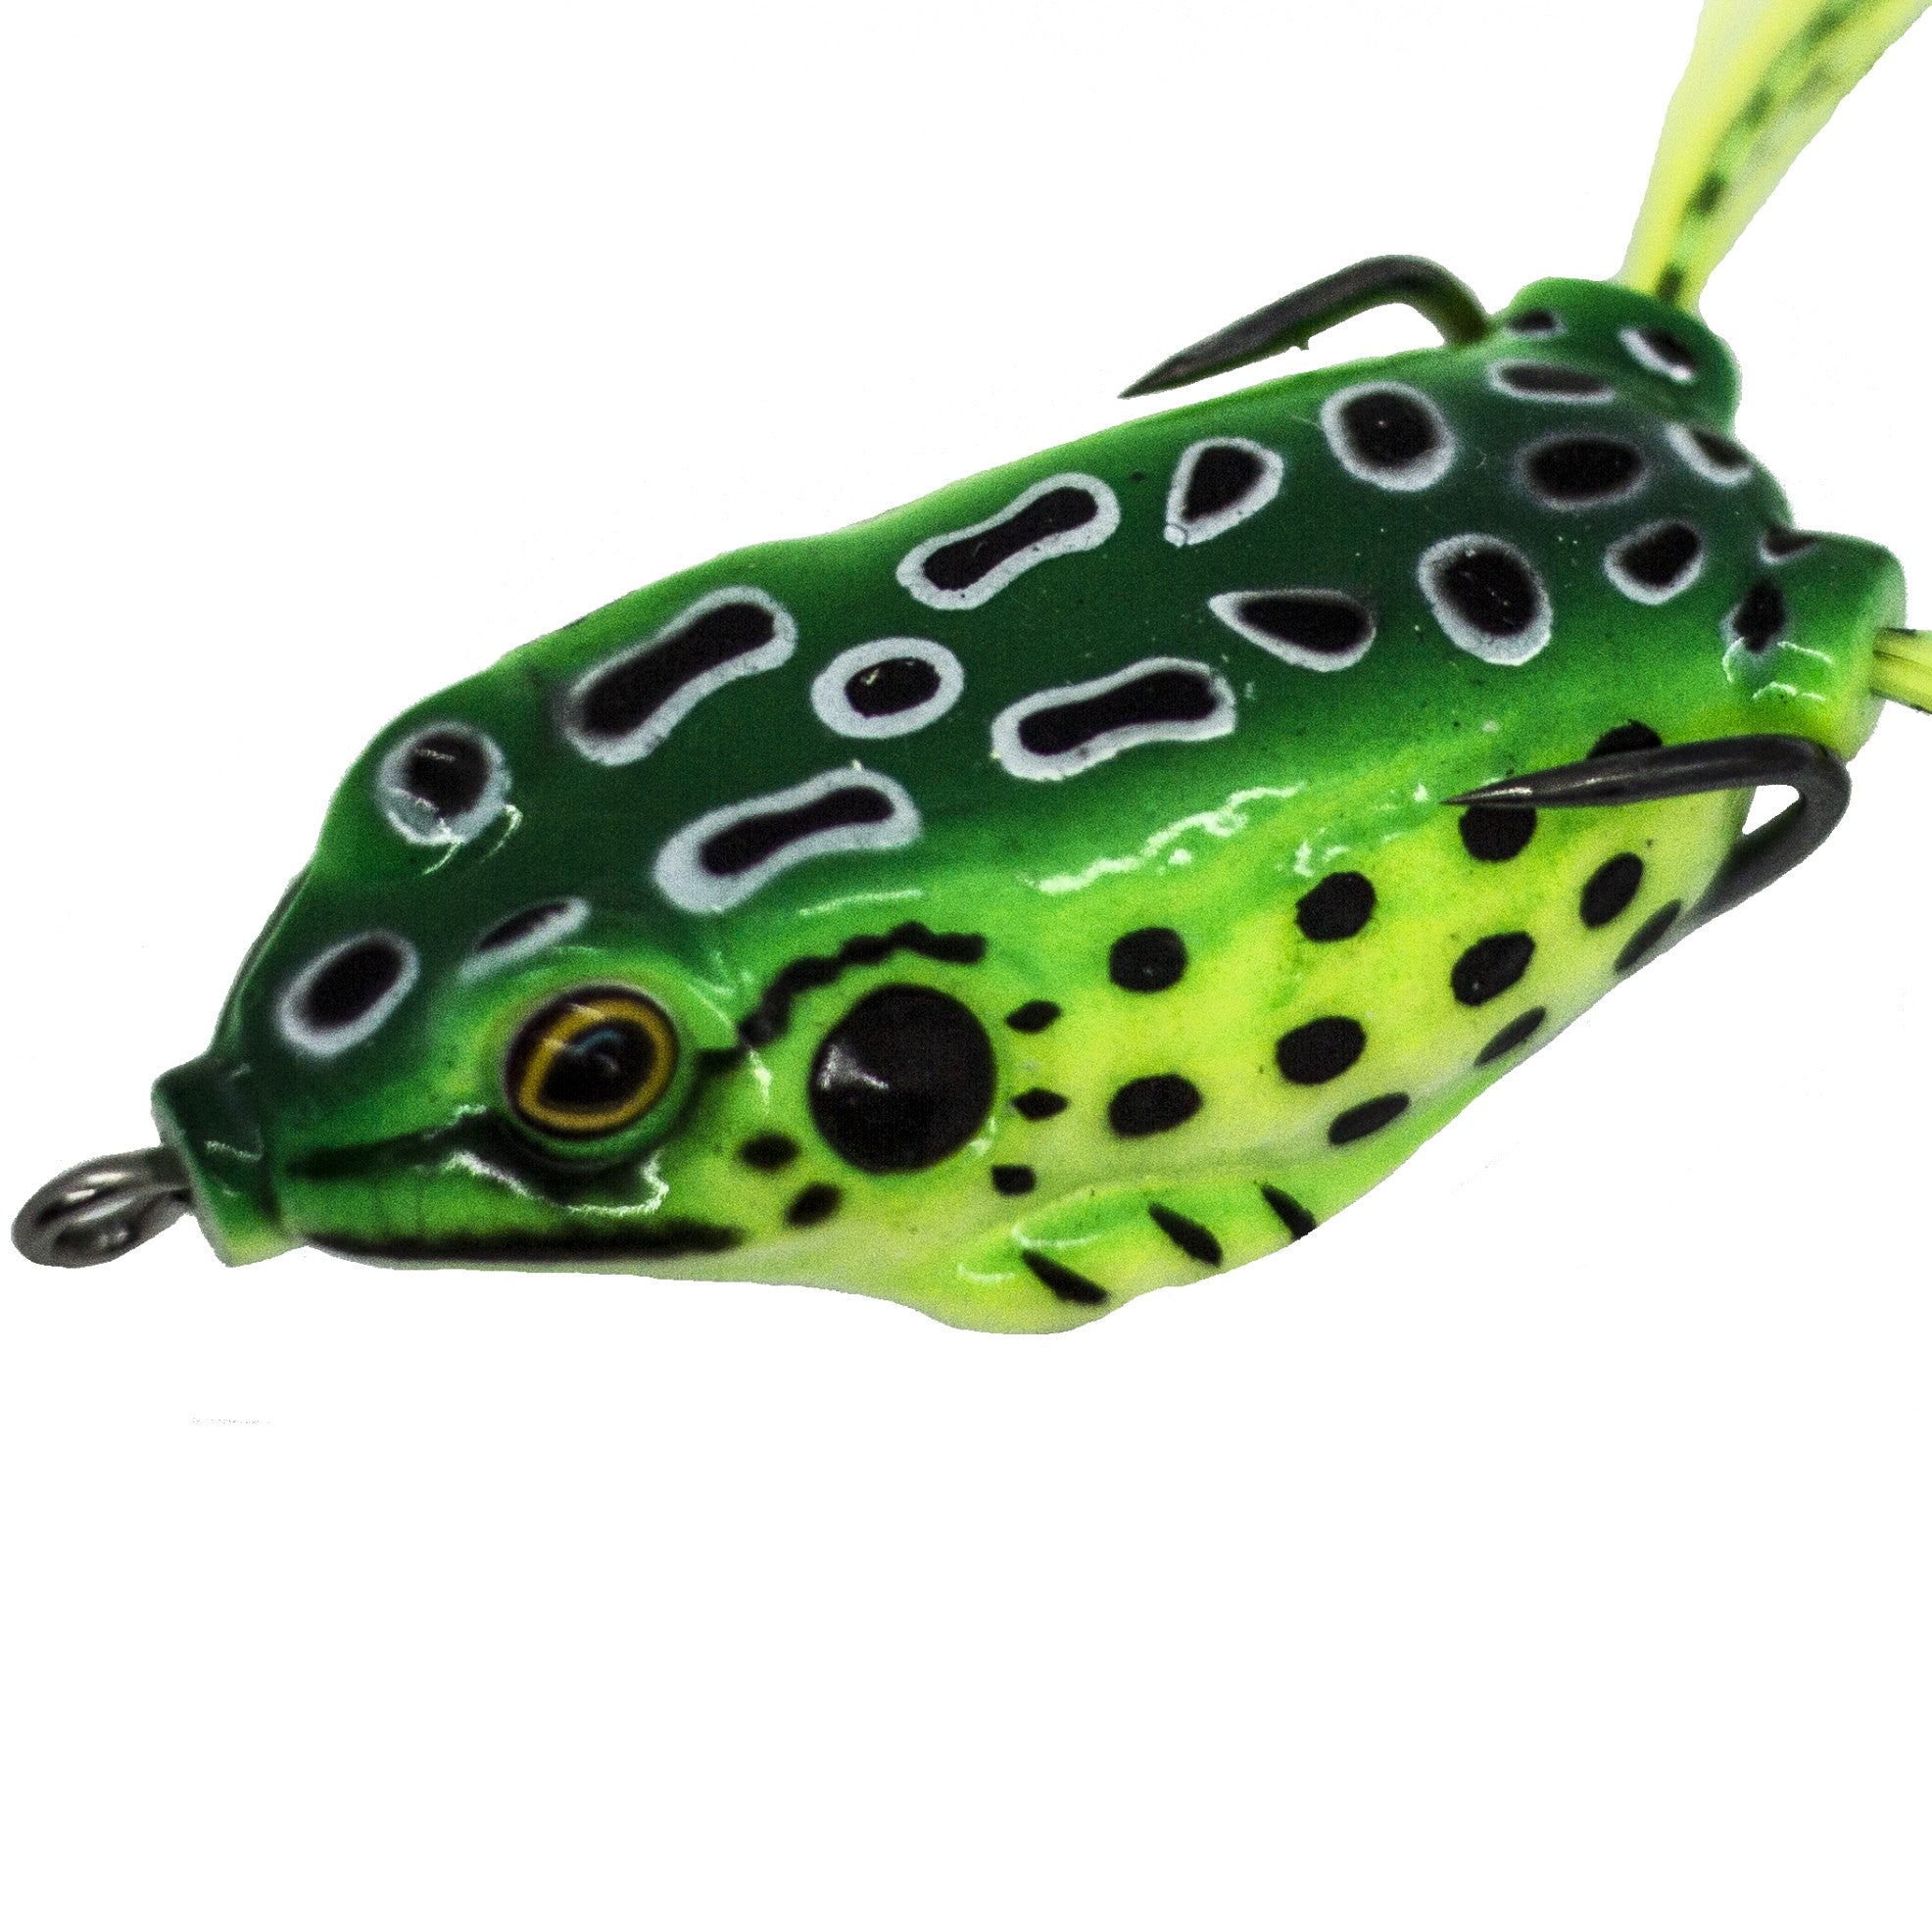 AUF Fishing Hook Isa Fish Top Water Frog Lure -(Green/White spot)